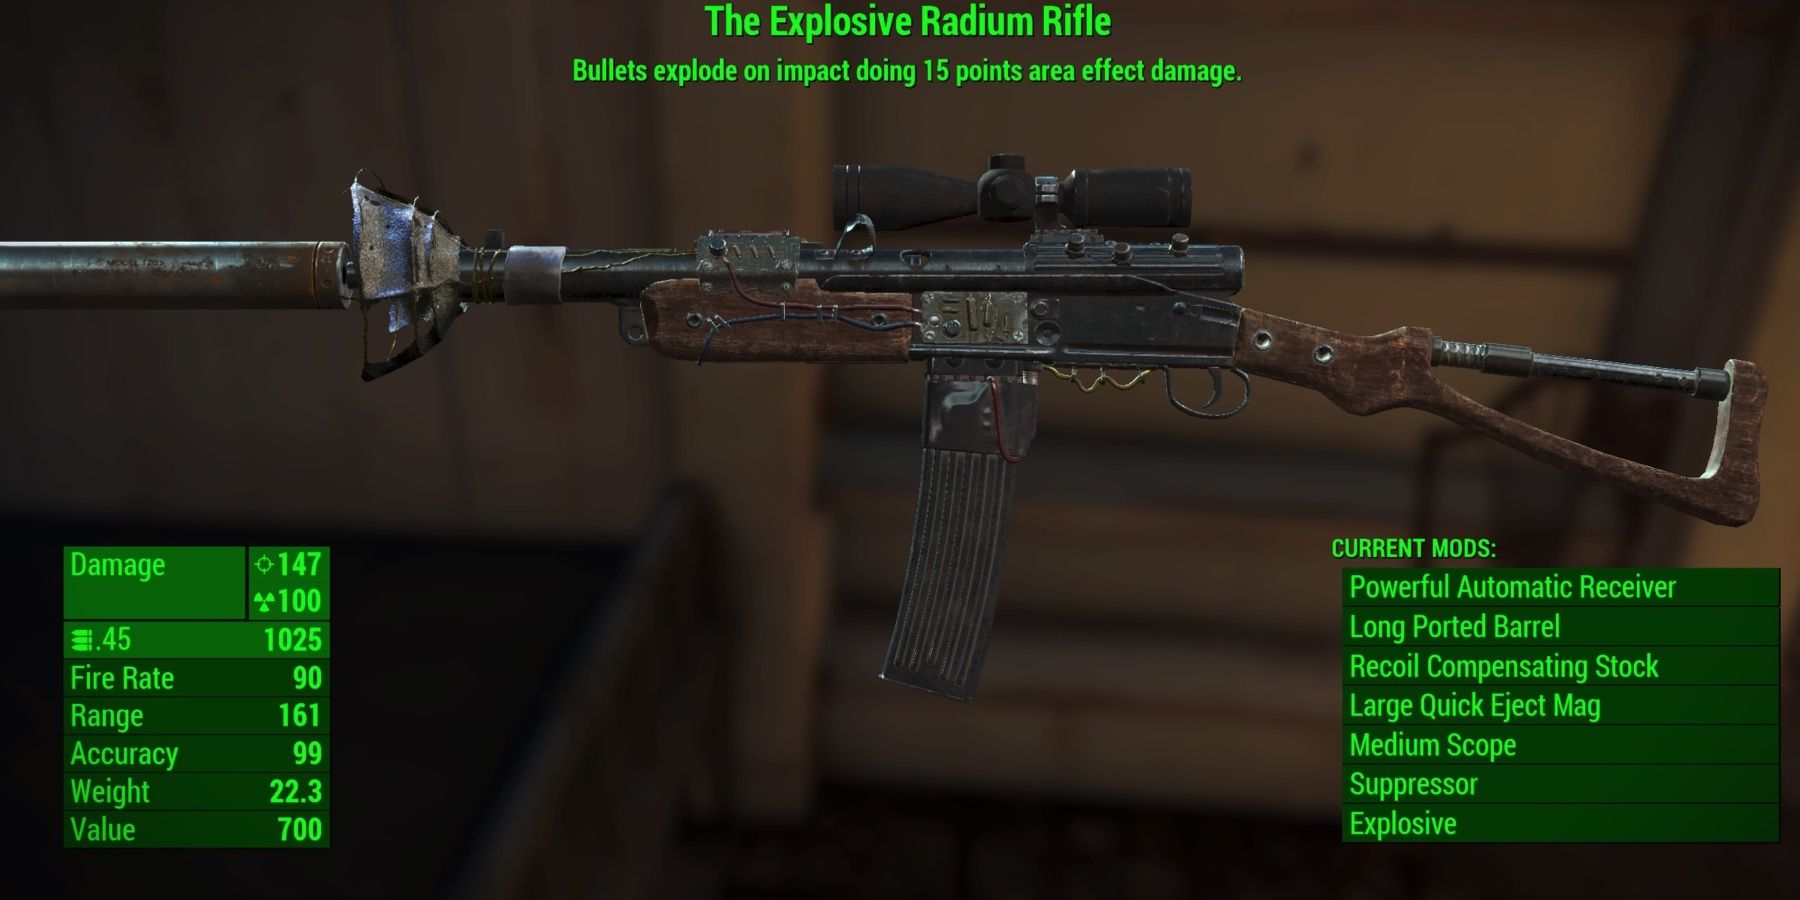 Explosive Radium Rifle in Fallout 4